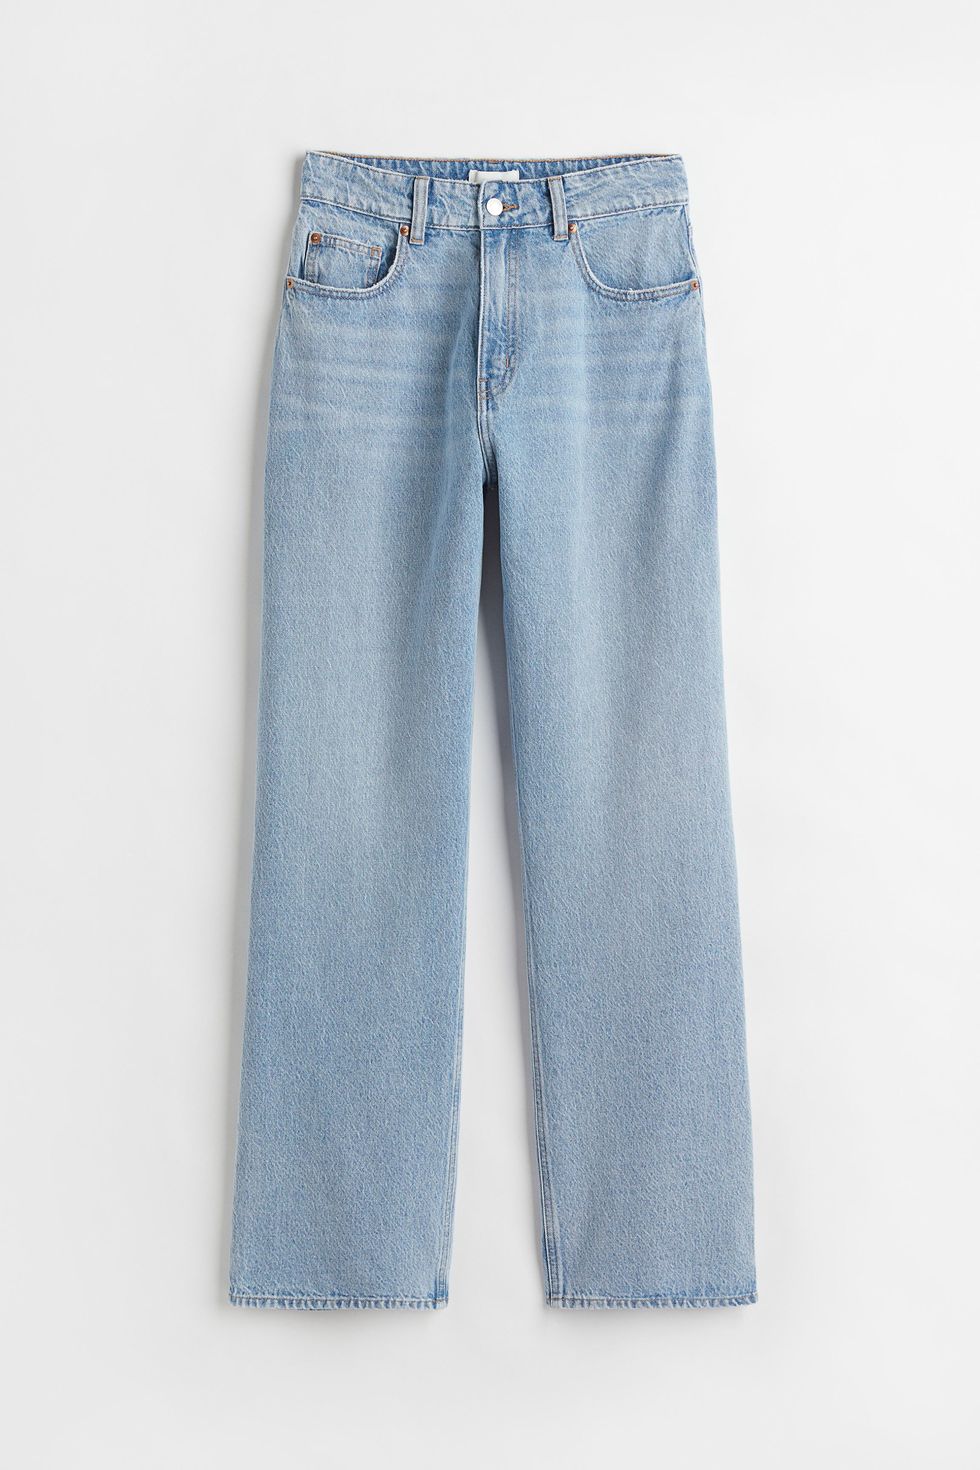 Best Jeans for Women 2023 - Essential Denim Styles Woman Should Own